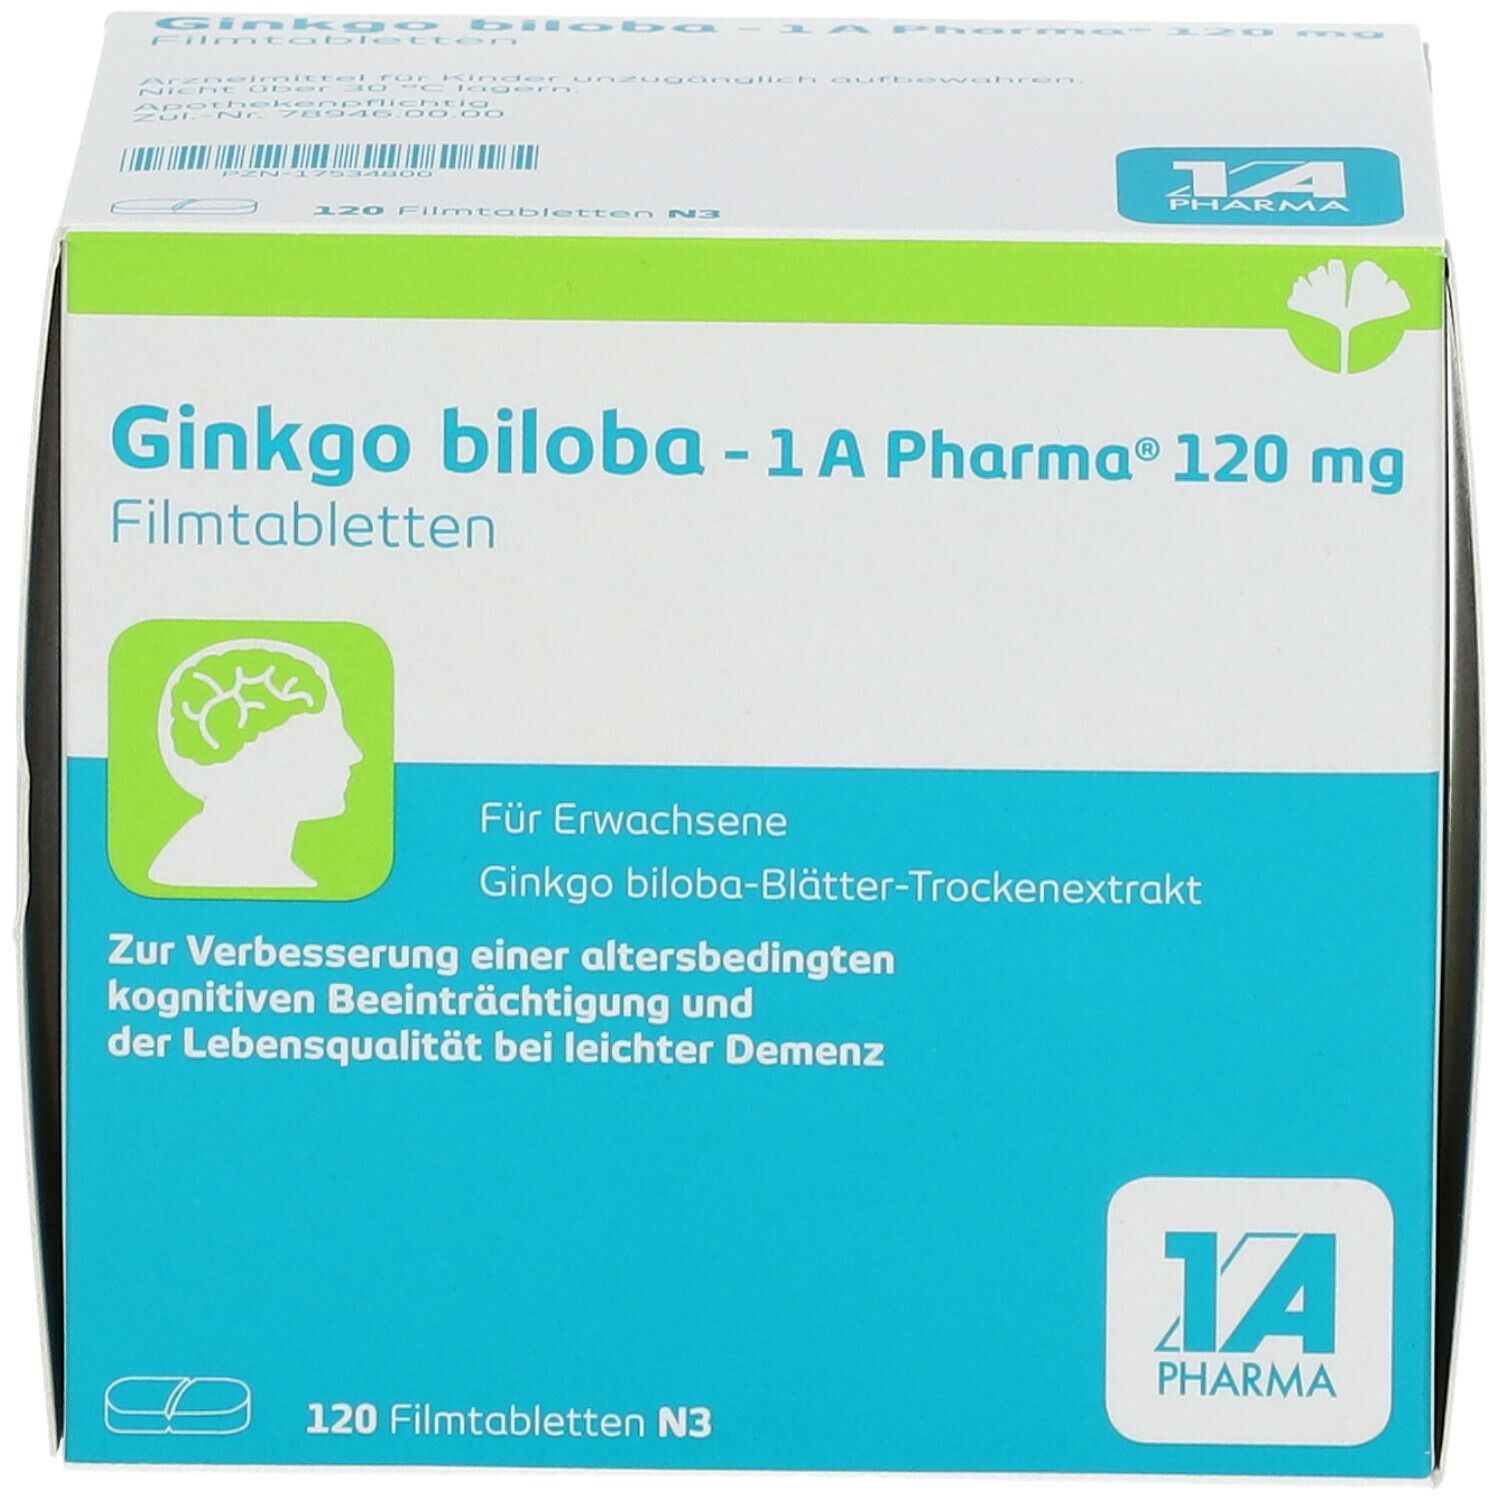 Ginkgo biloba – 1 A Pharma® 120 mg